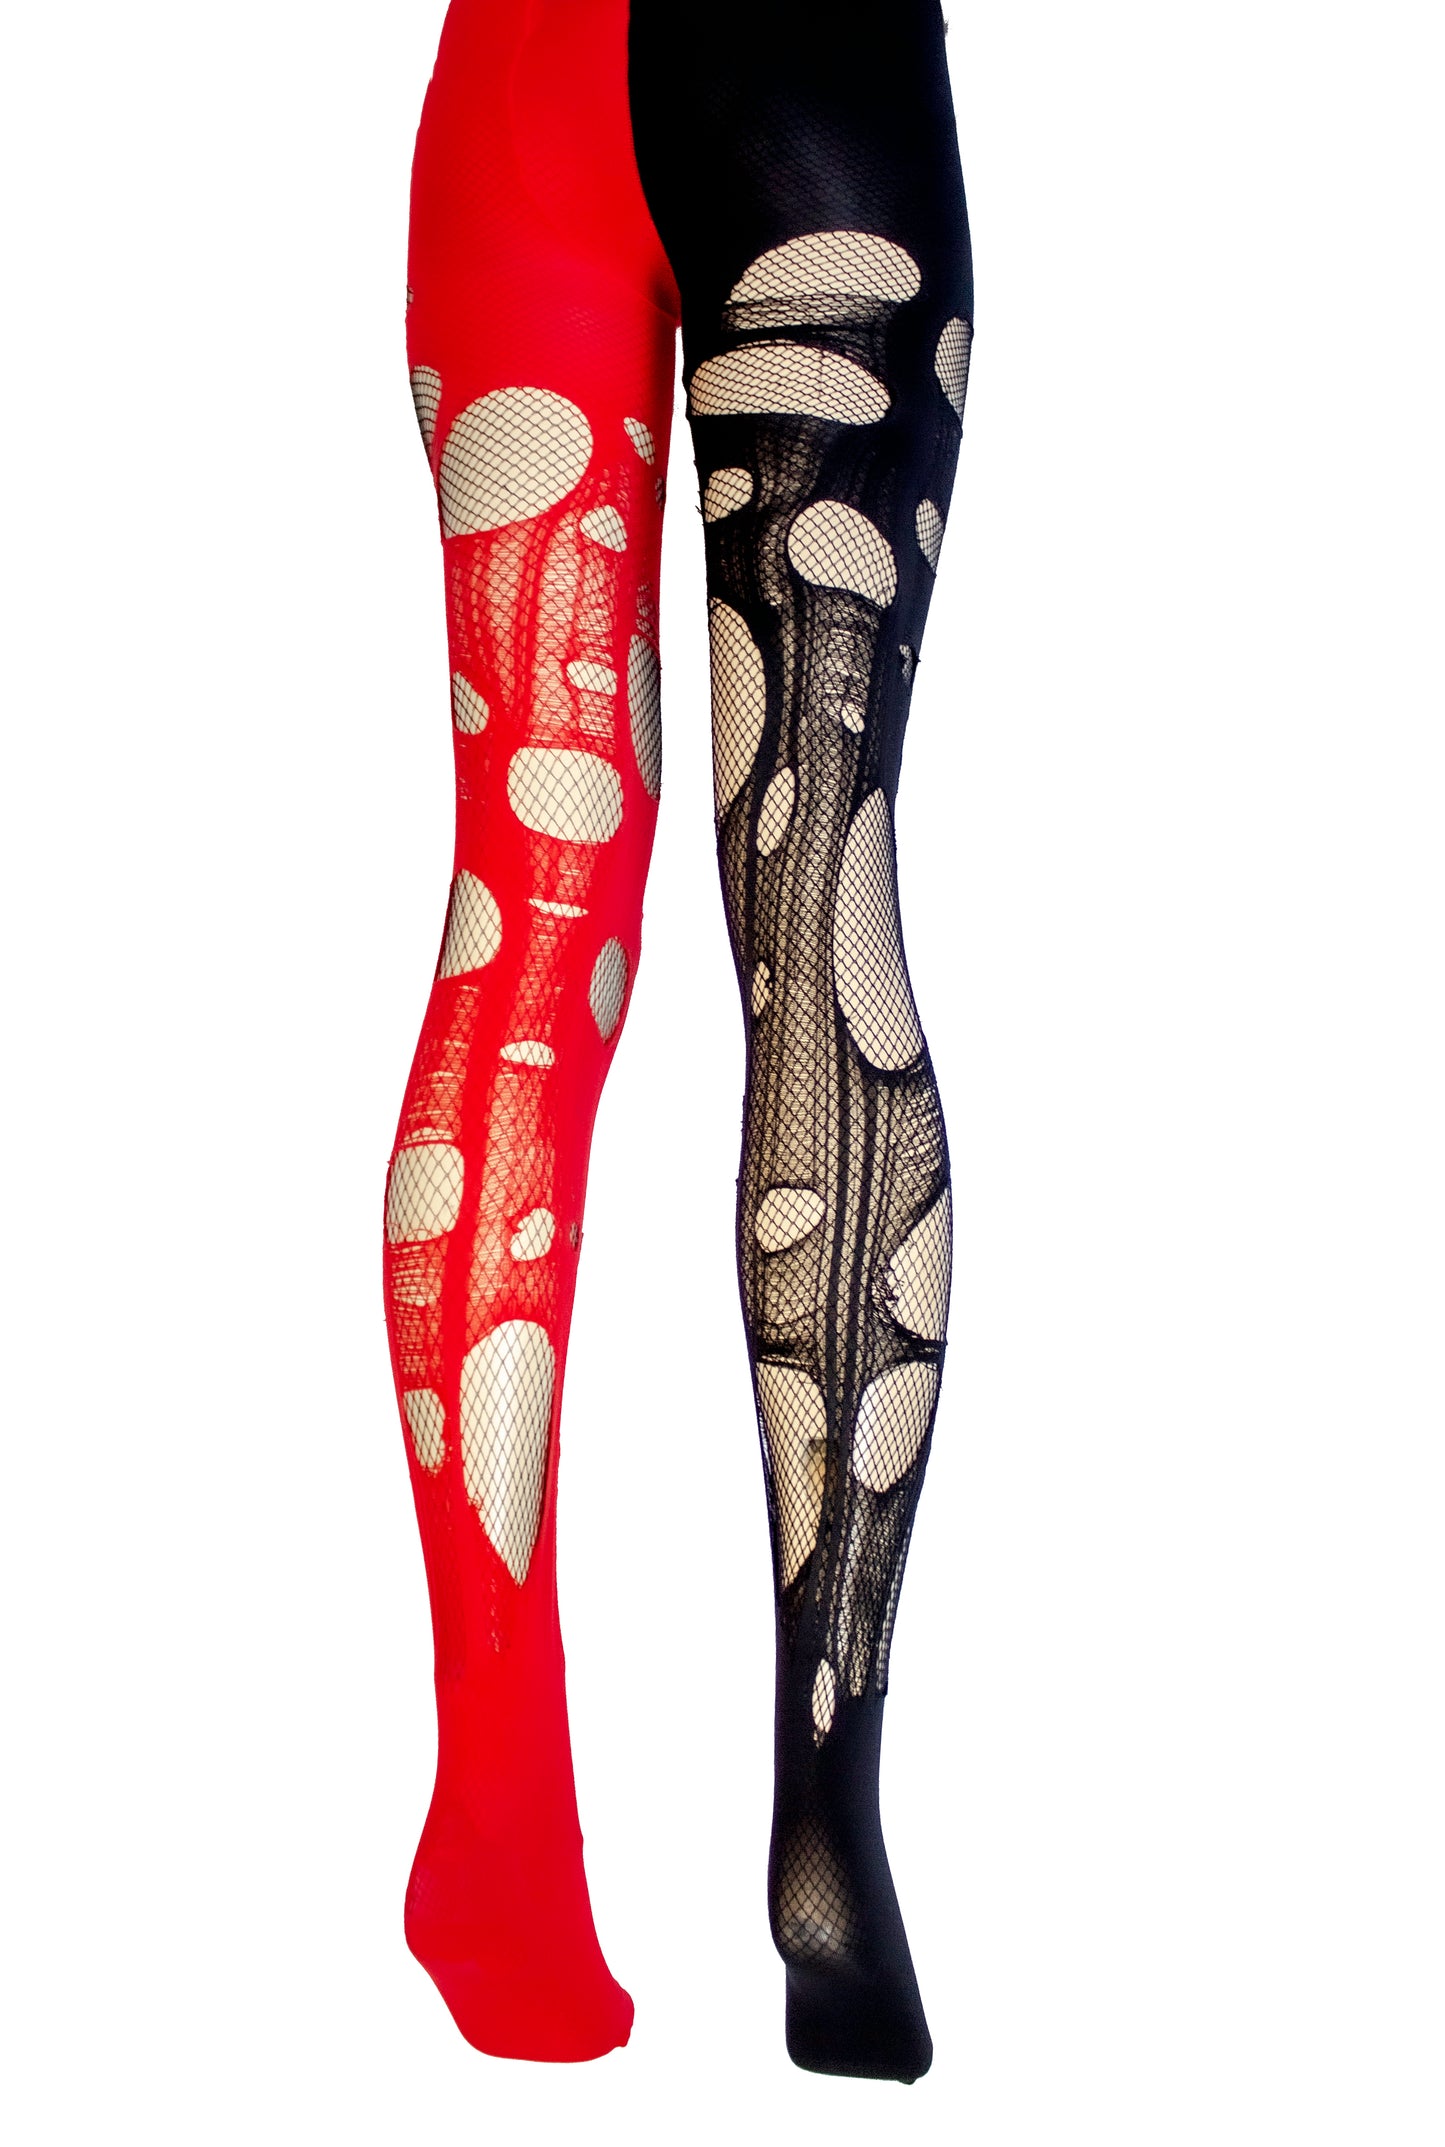 tattered & torn fishnet tights | Red & Black